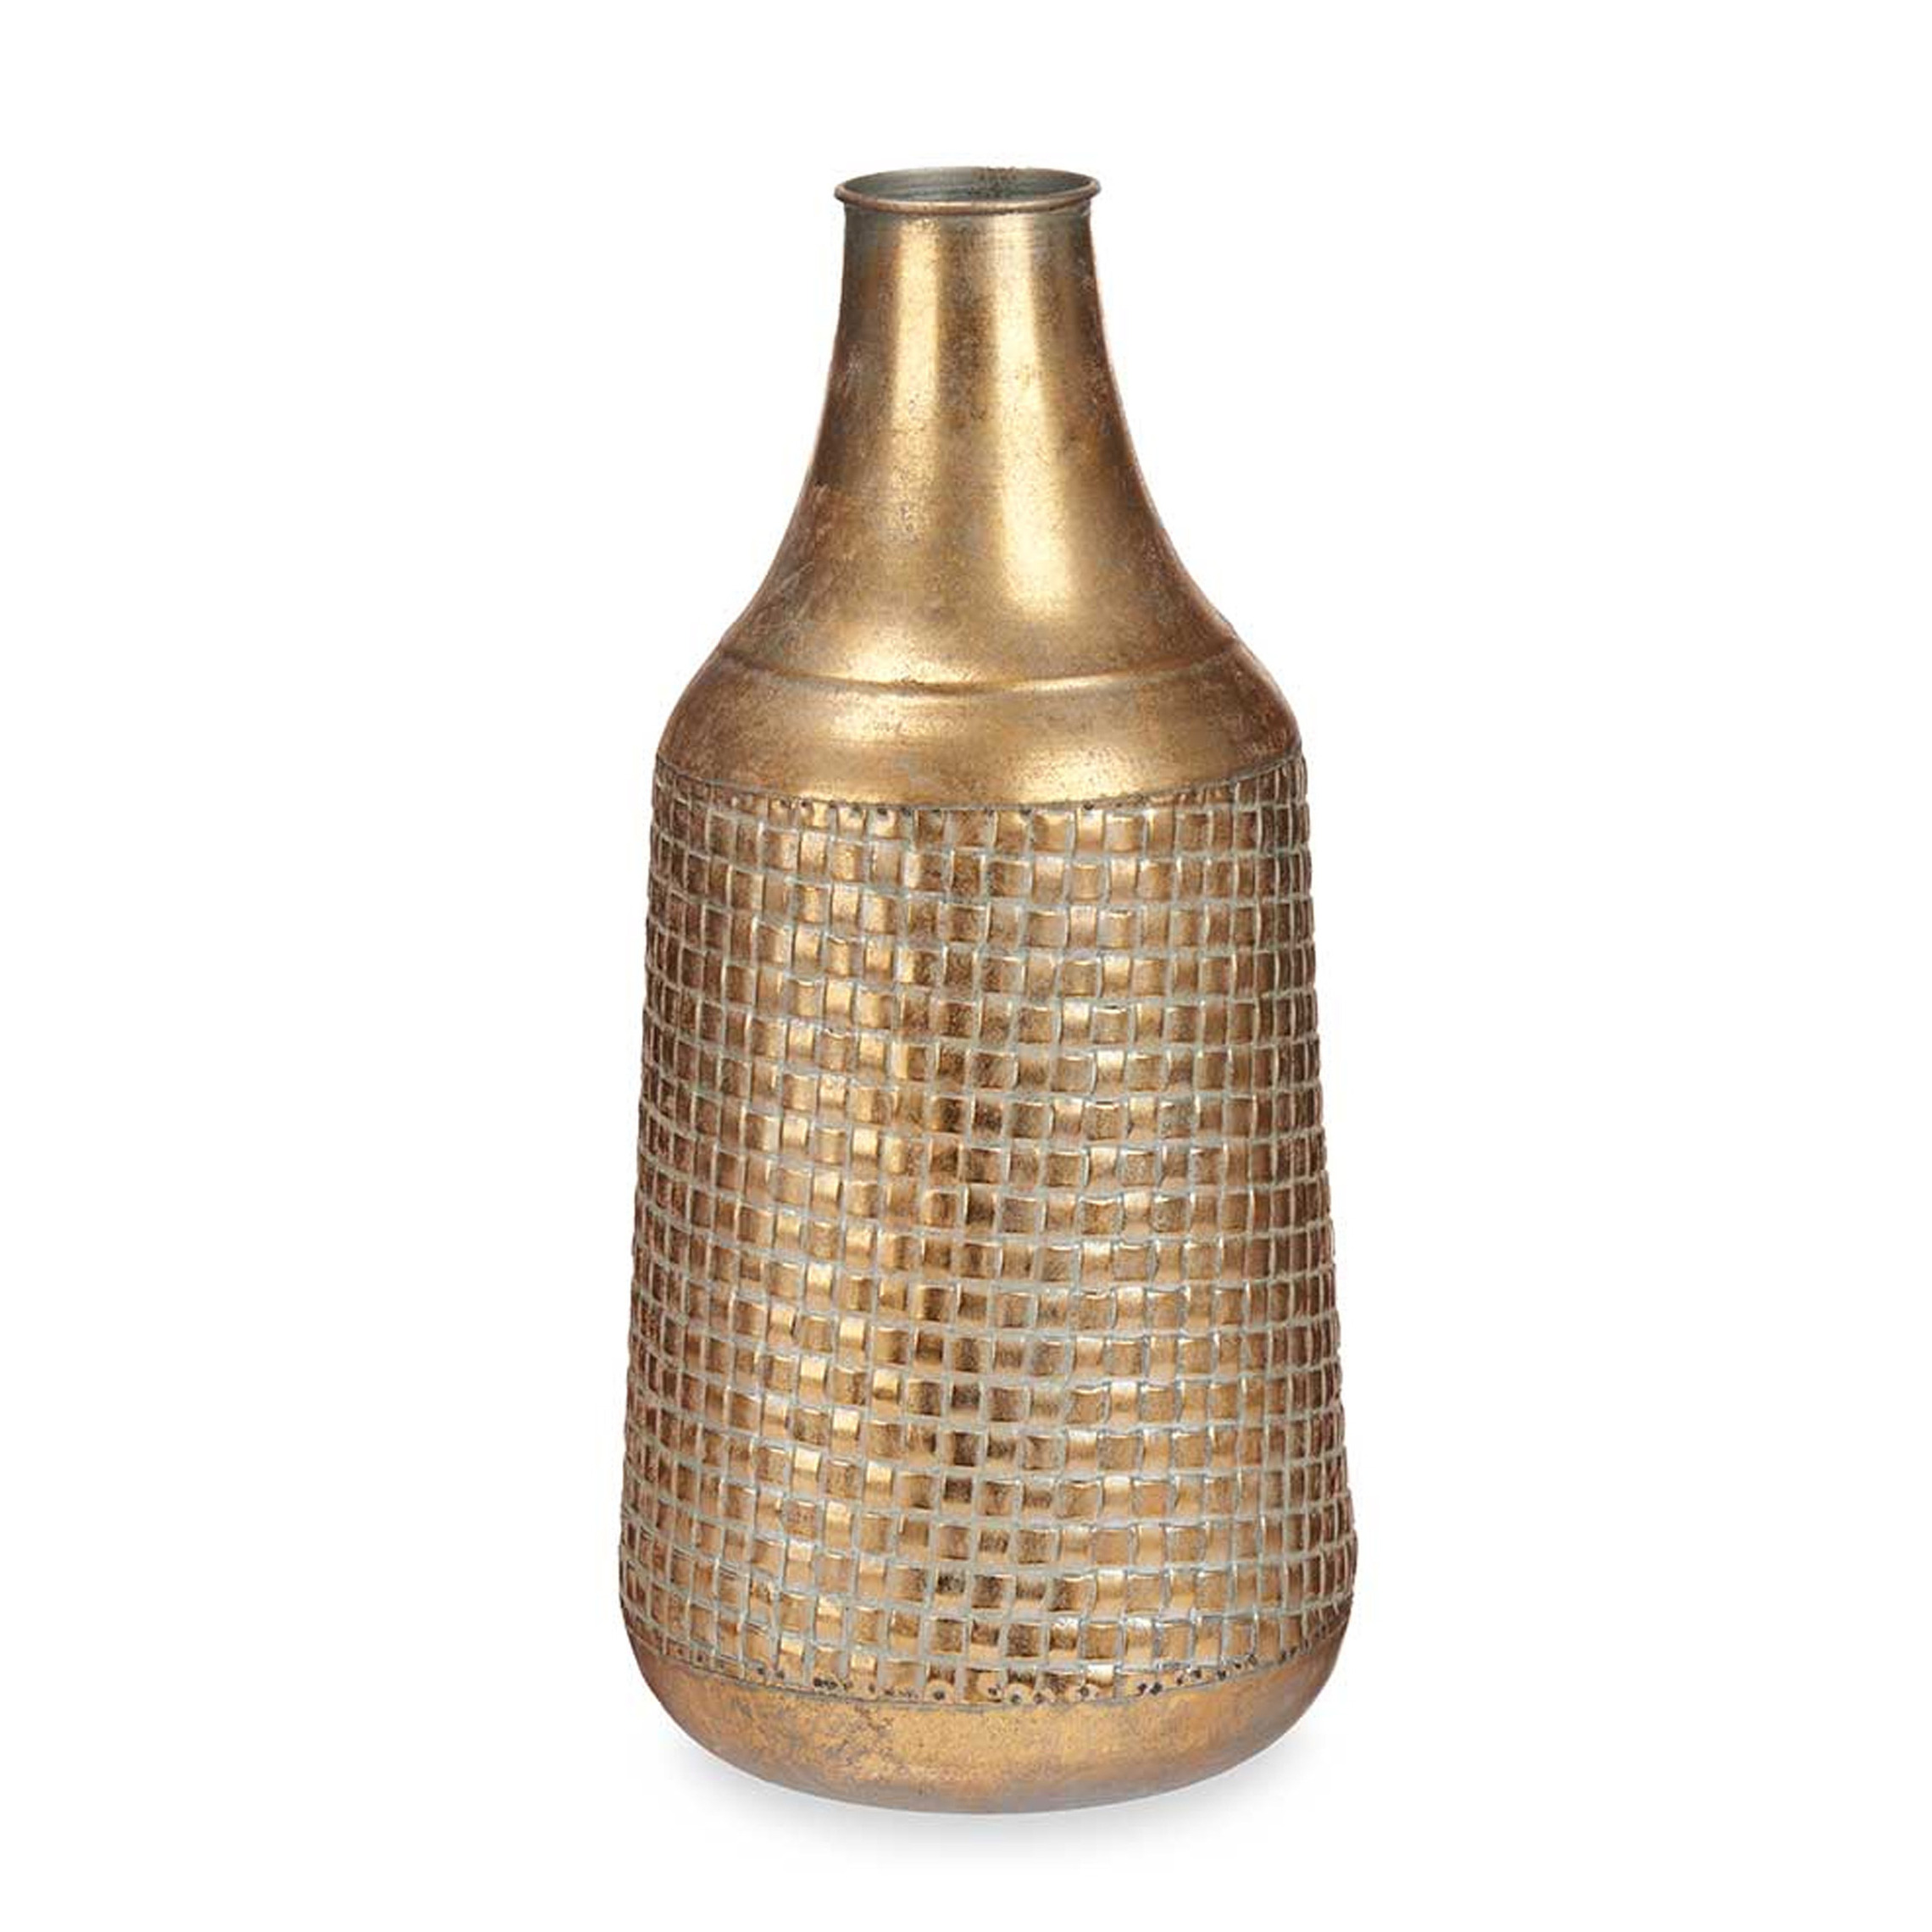 Giftdecor Bloemenvaas Antique Roman - goud - metaal - D21 x H44 cm -